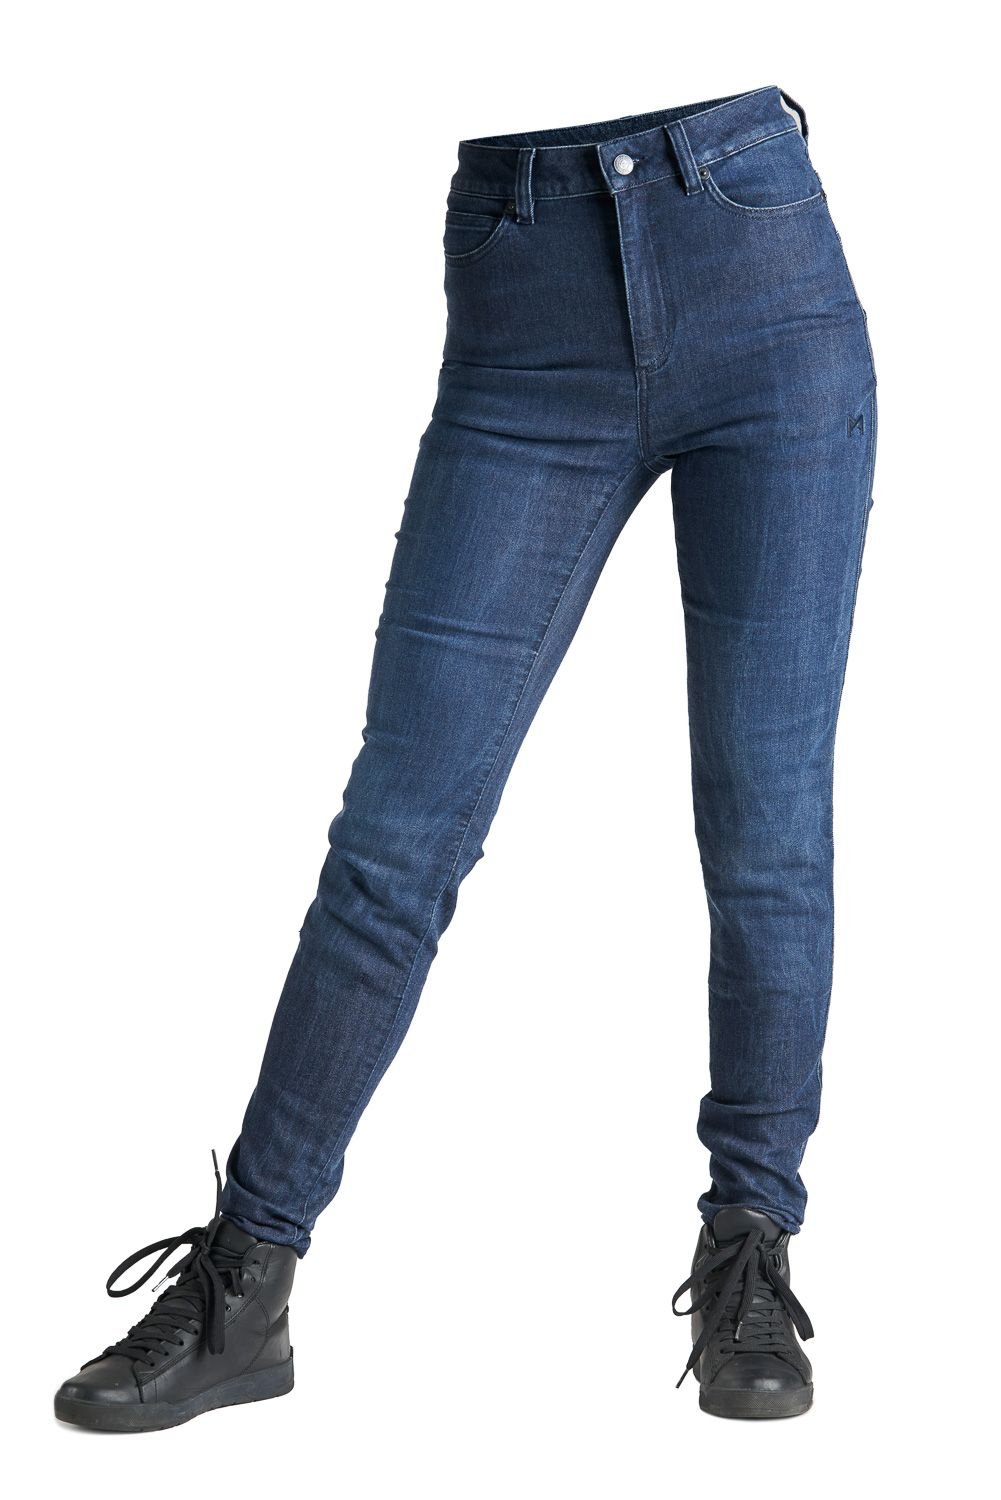 Image of Pando Moto Kusari Cor 02 Women Motorcycle Jeans Skinny-Fit Cordura Talla W27/L34